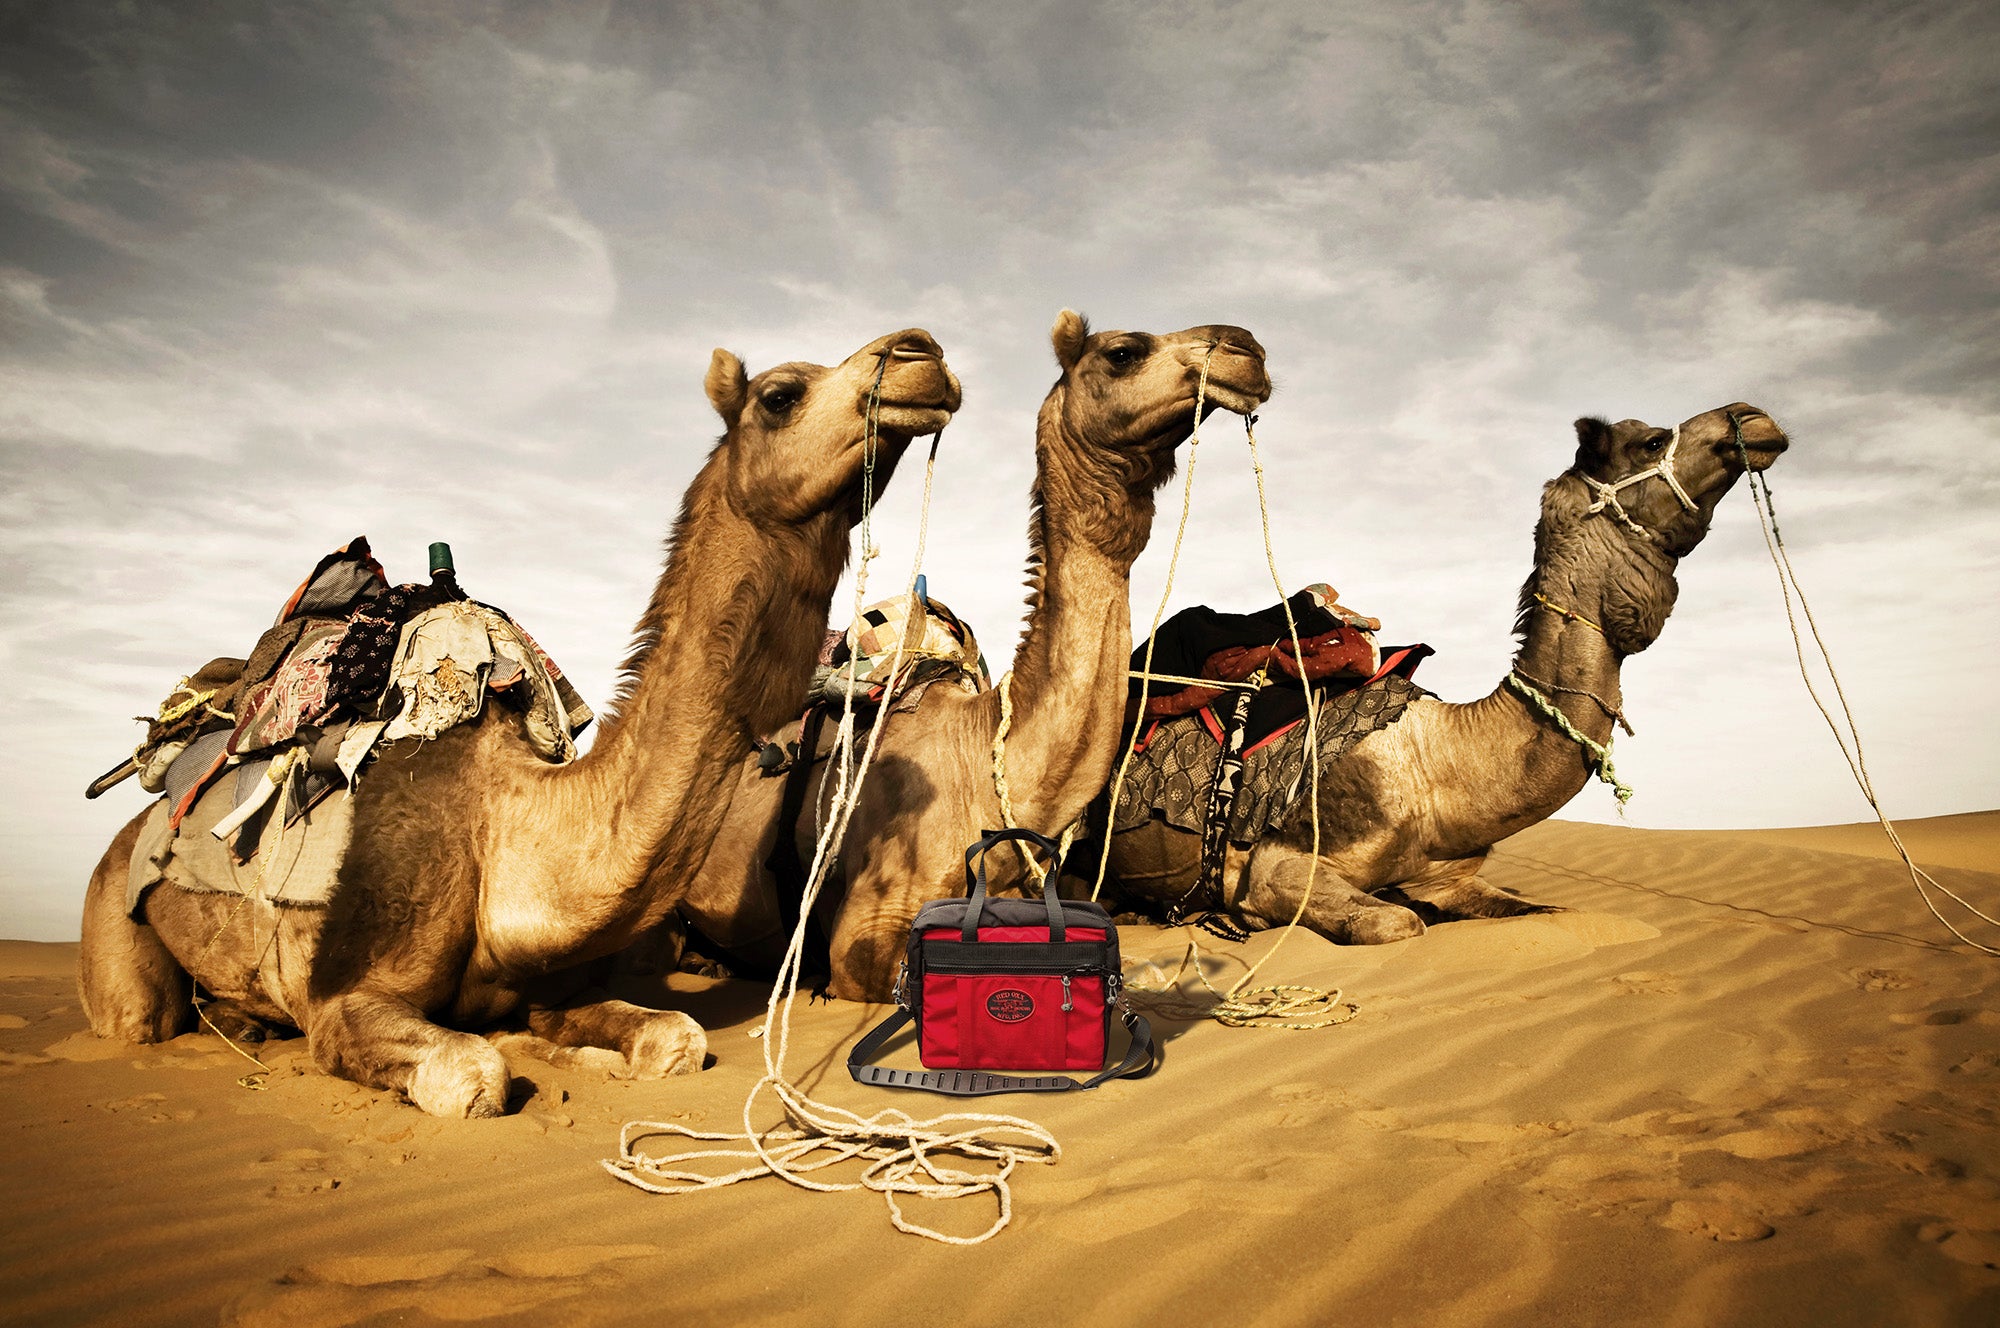 Gator EDC Bag Rides Tough on Camel Caravan